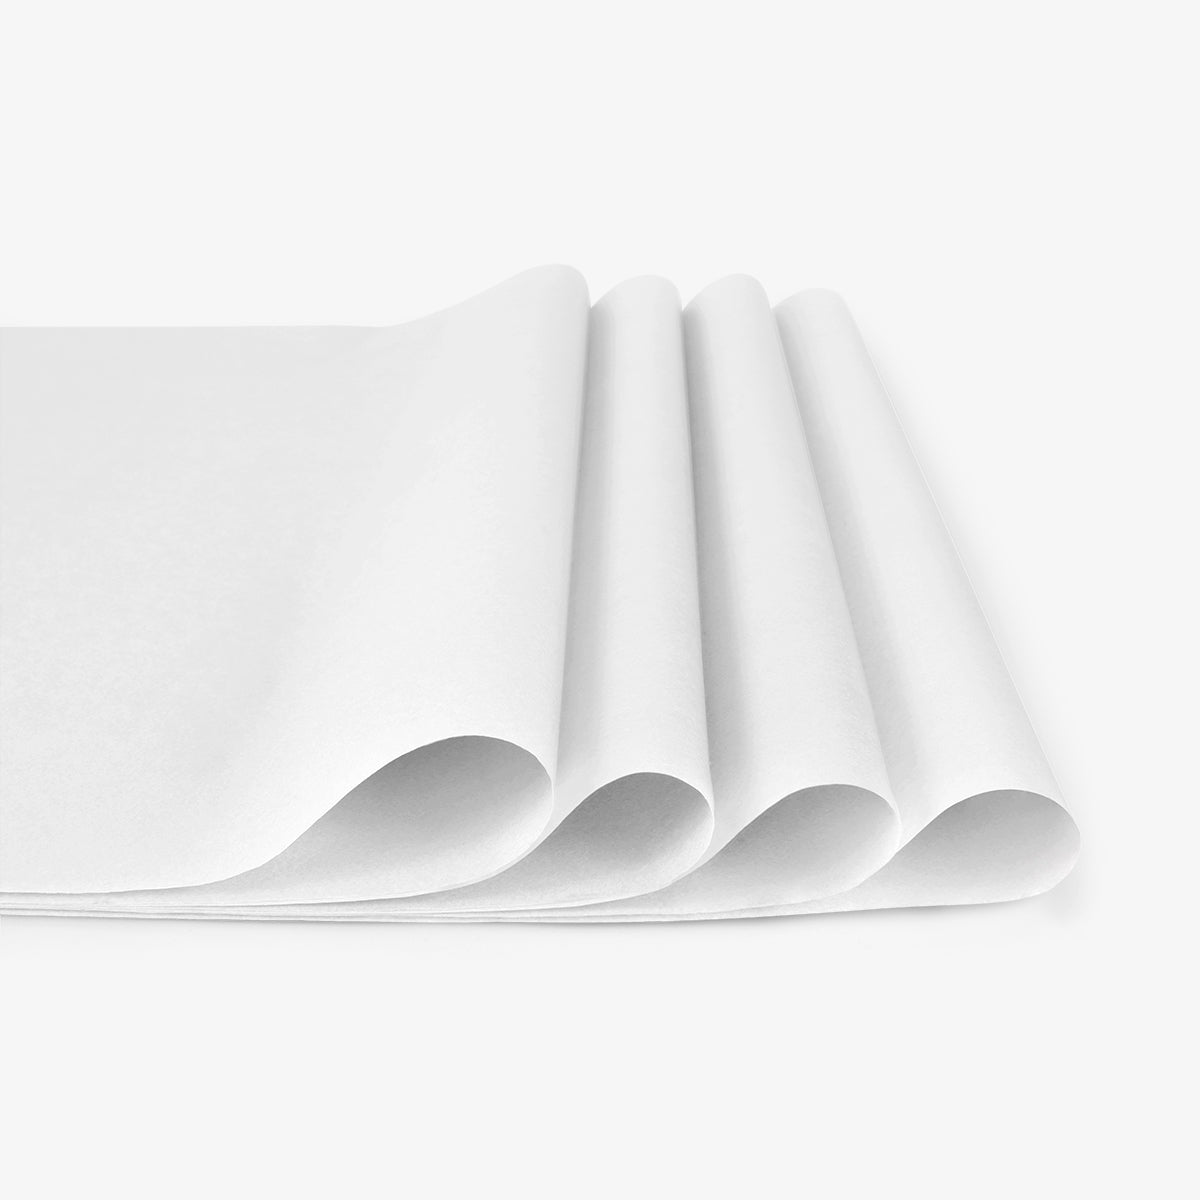 100 CT White 17GSM (Thicker, Durable & Crispy) TISSUE PAPER (White)